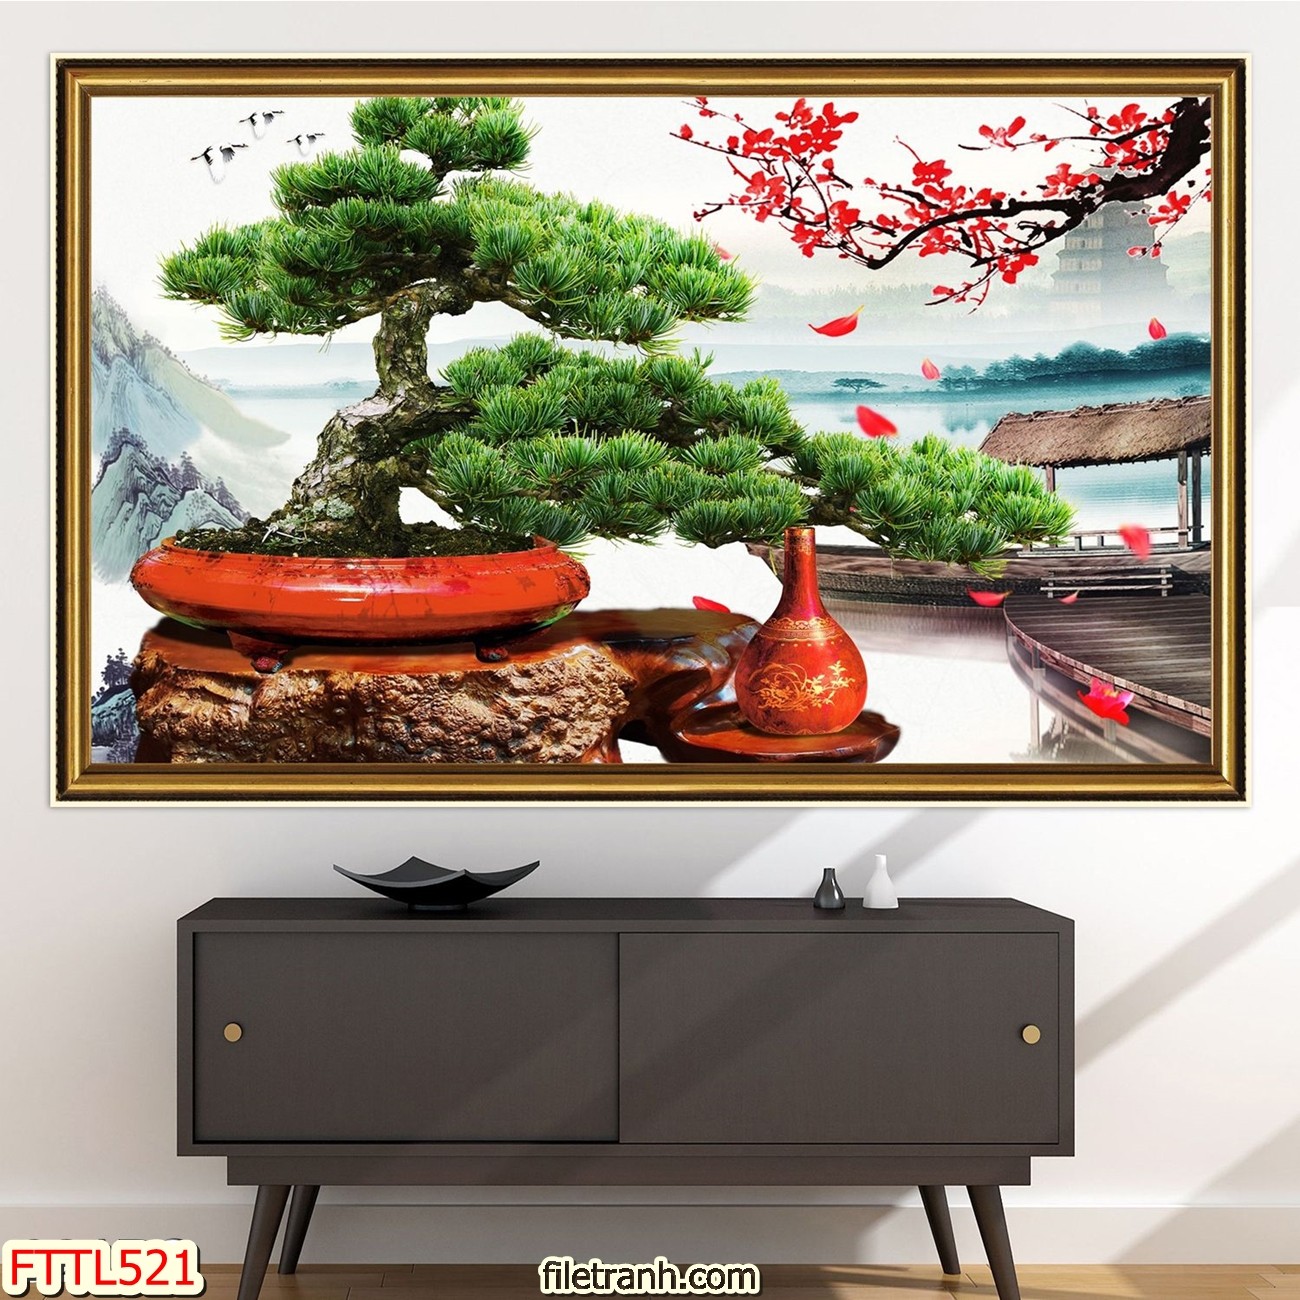 https://filetranh.com/file-tranh-chau-mai-bonsai/file-tranh-chau-mai-bonsai-fttl521.html